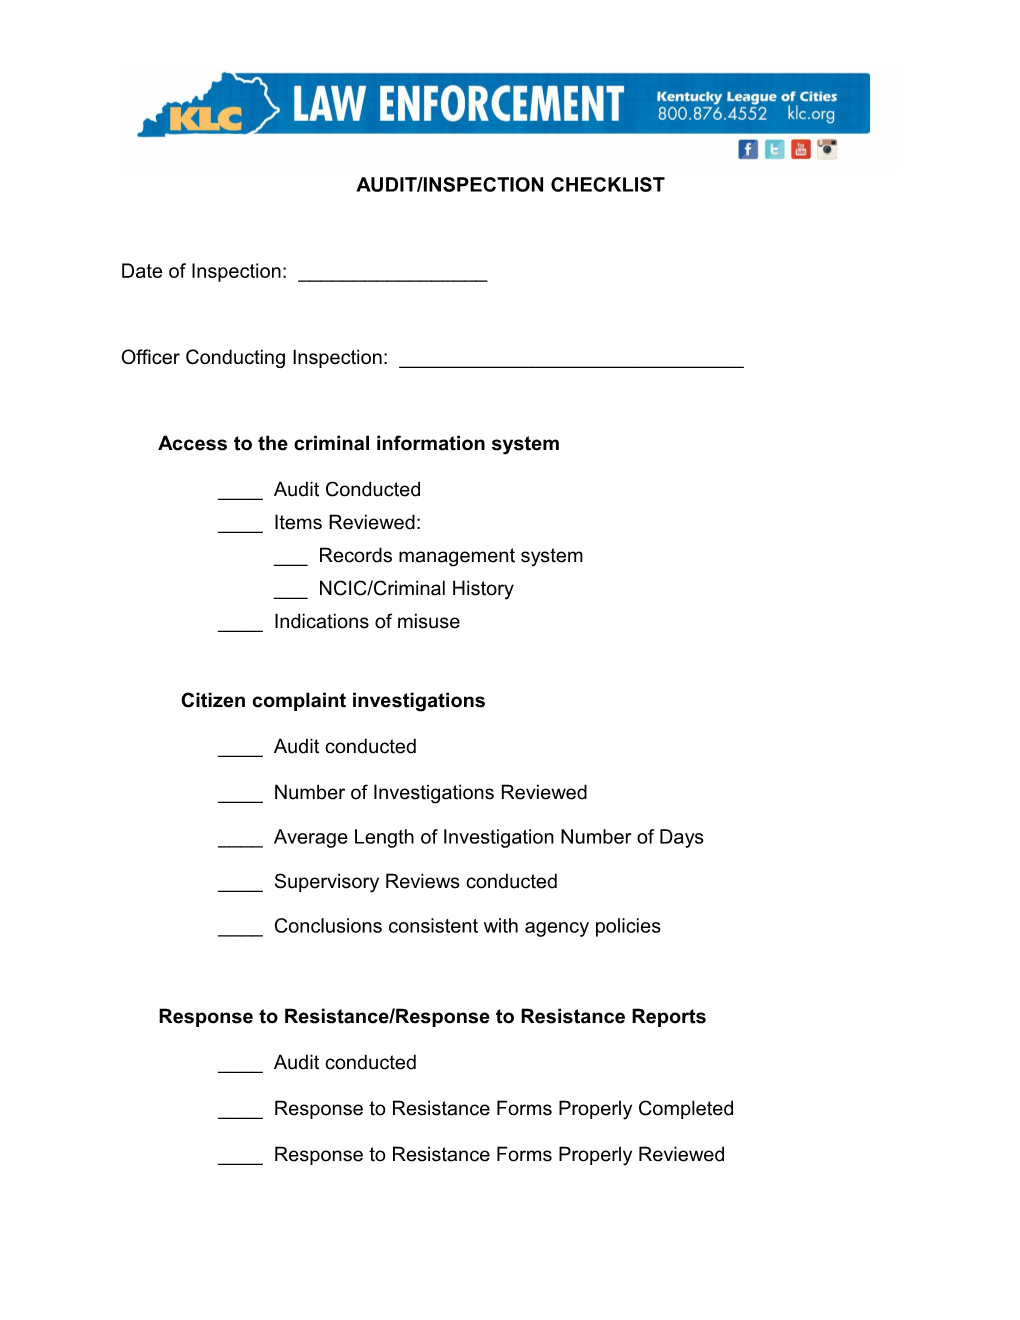 Audit/Inspection Checklist